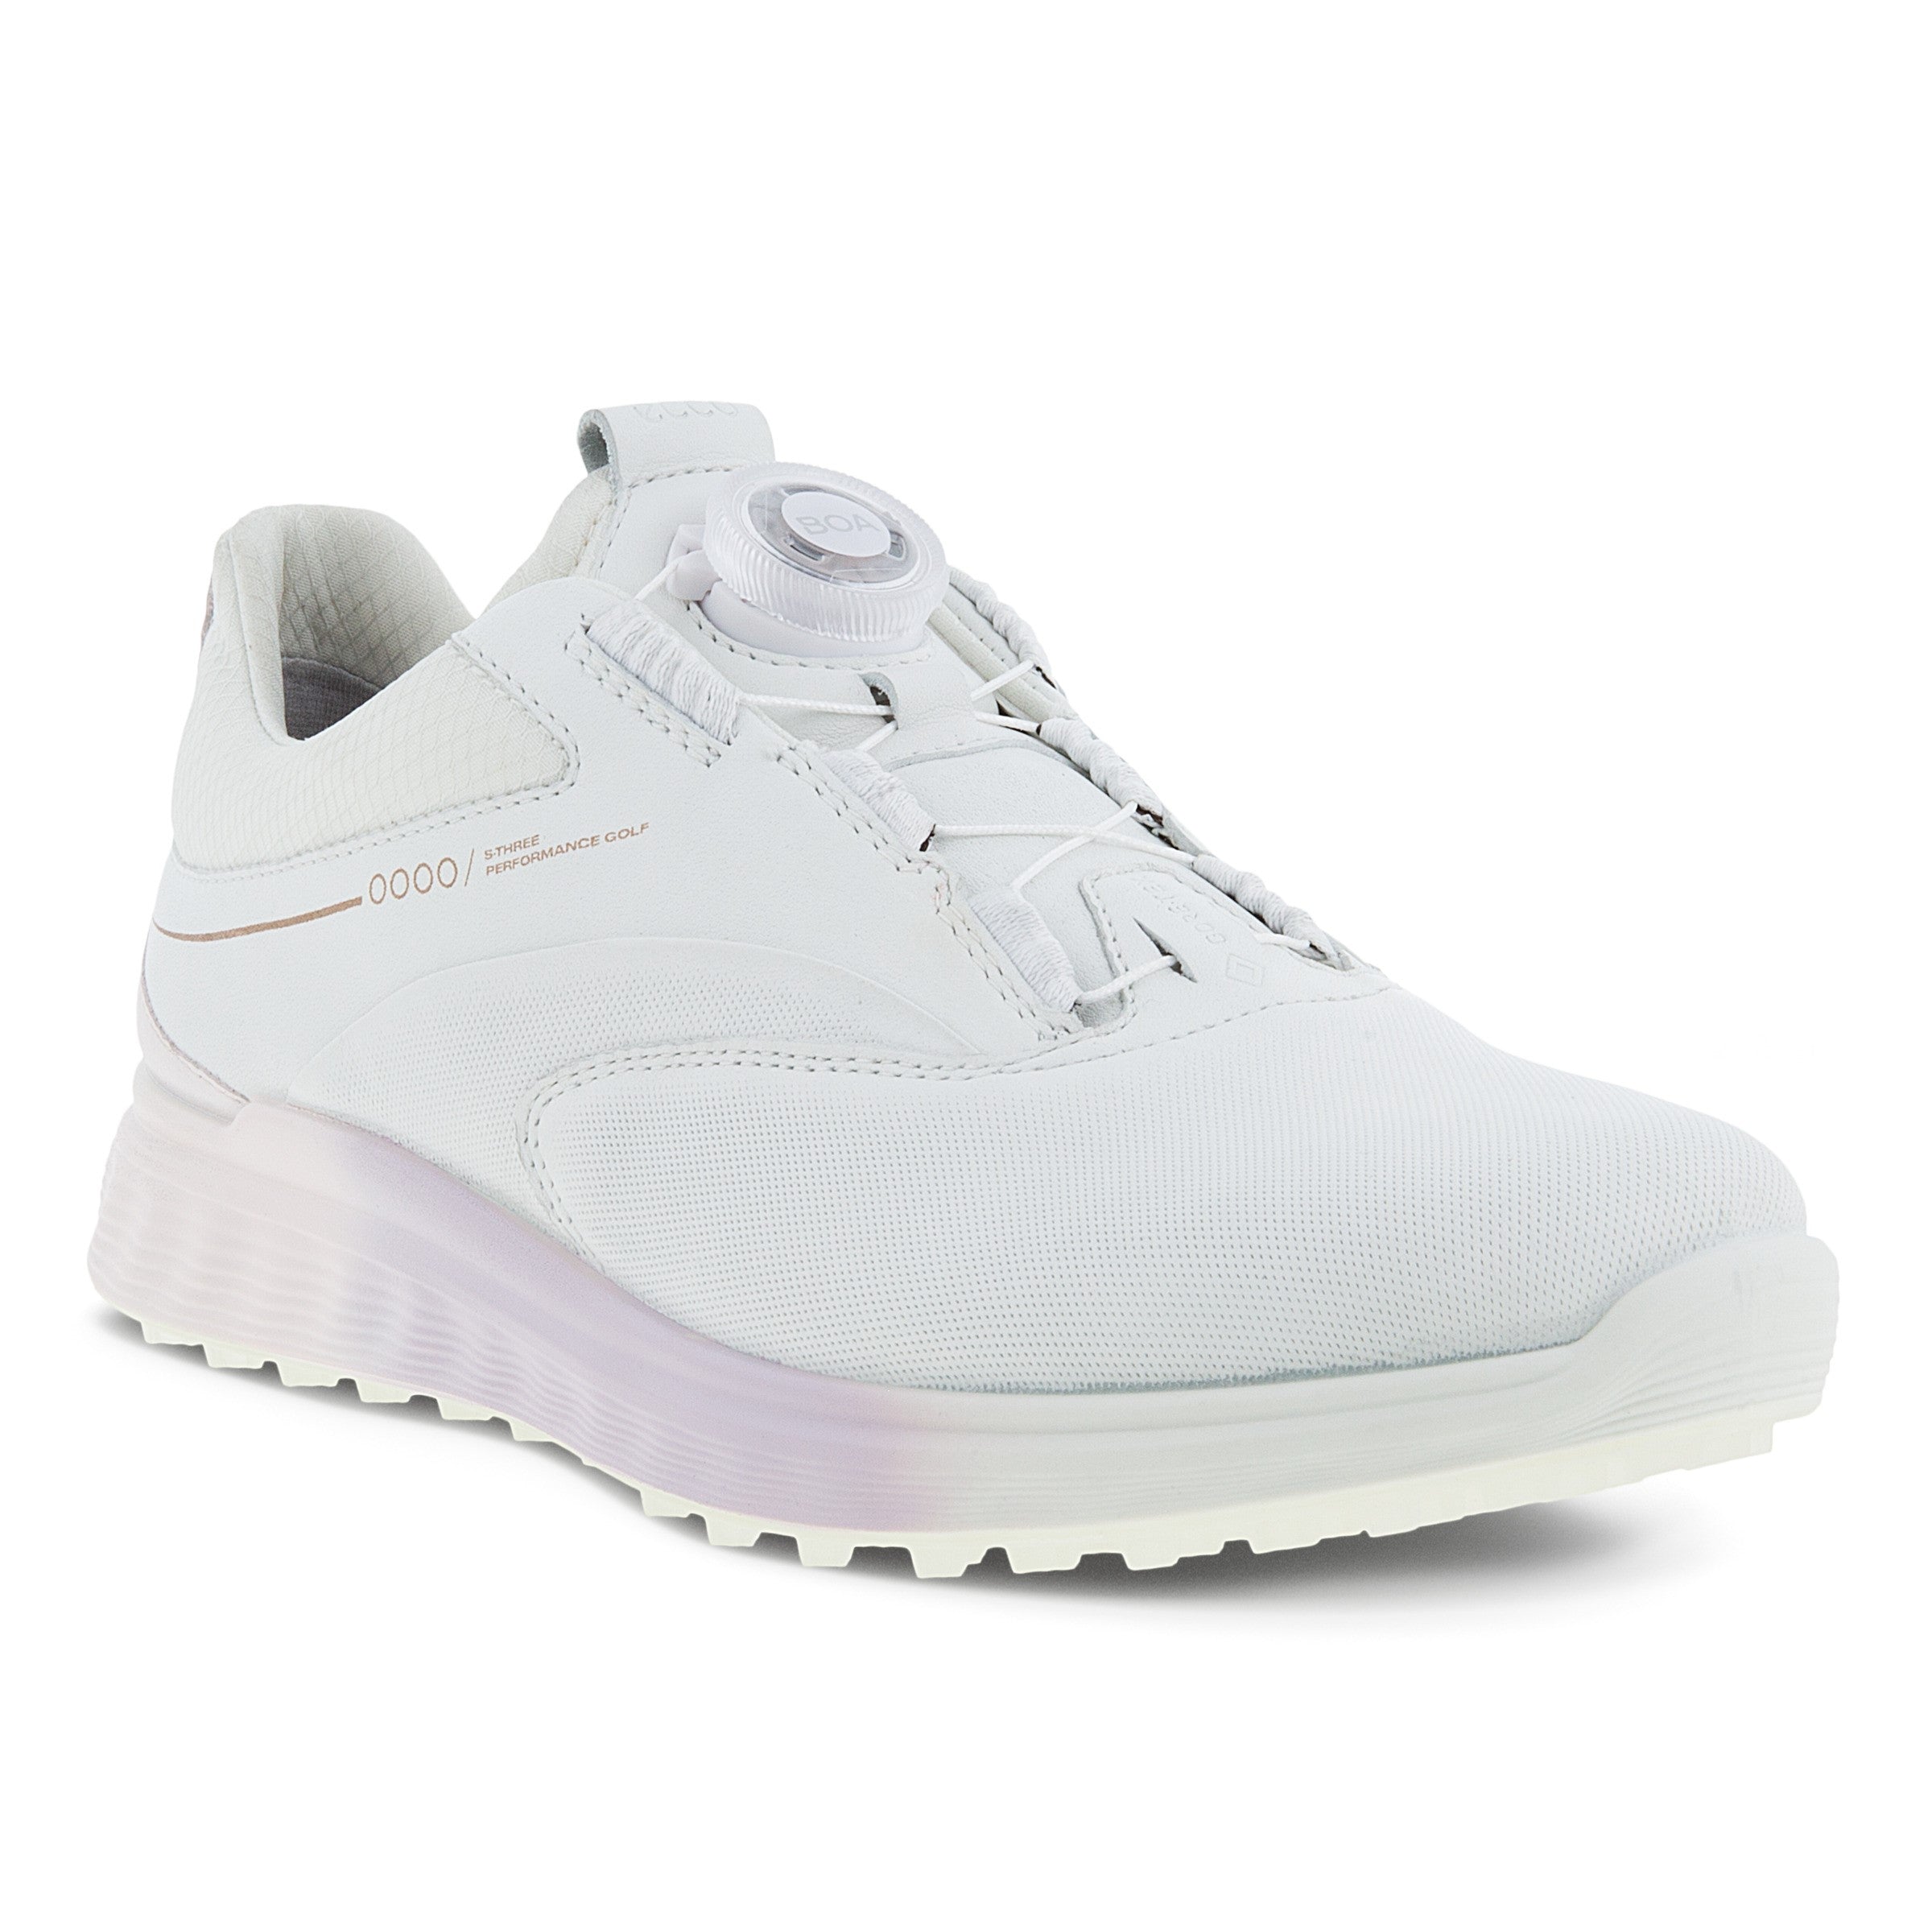 Ecco S Three BOA Womens Golf Shoes